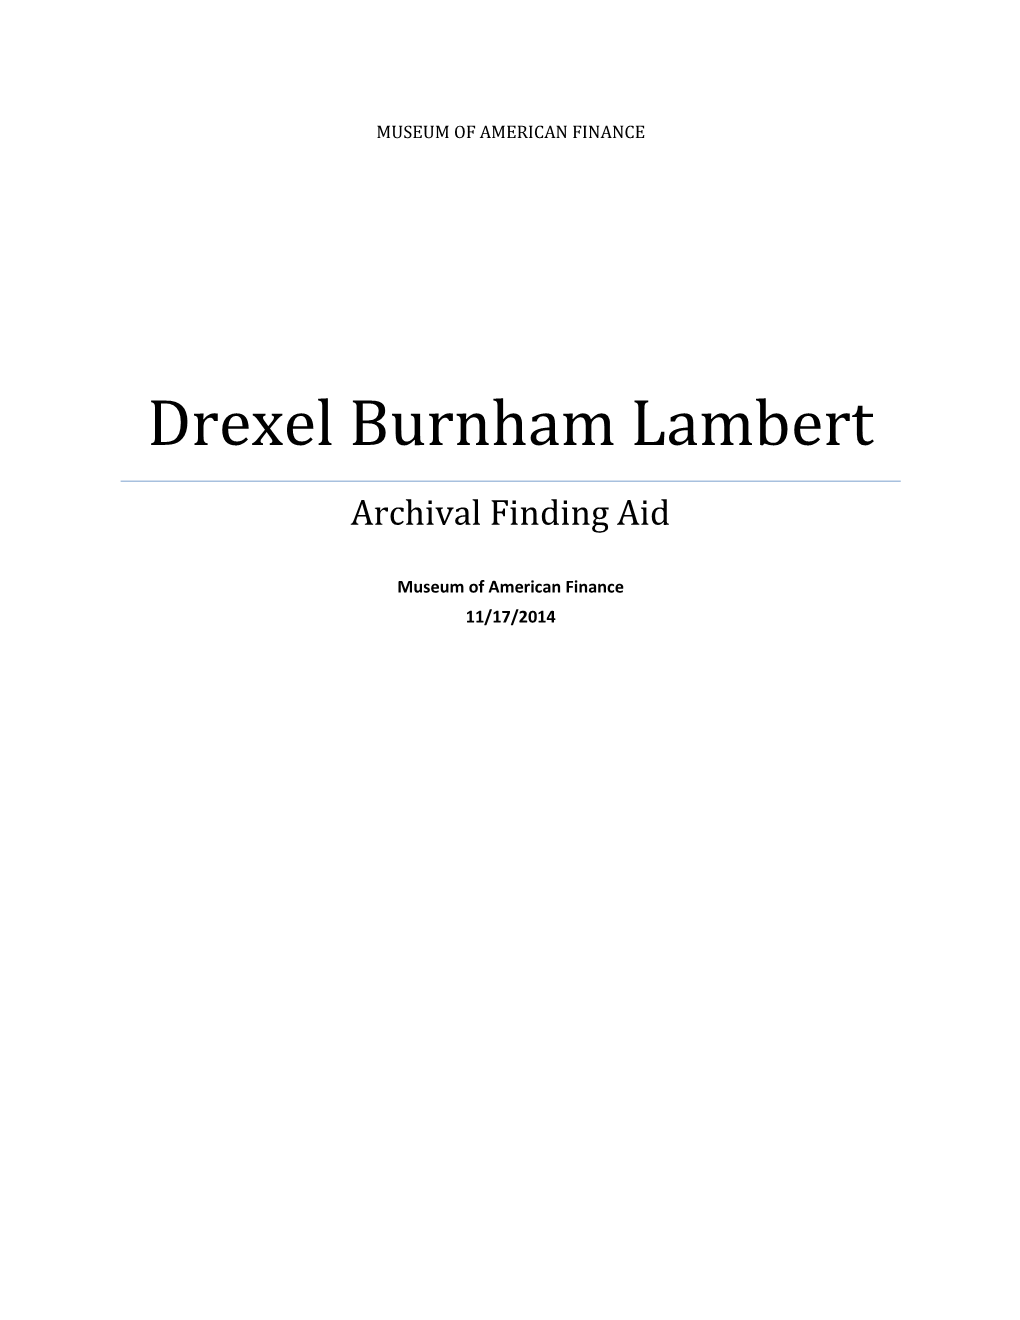 Drexel Burnham Lambert Archival Finding Aid